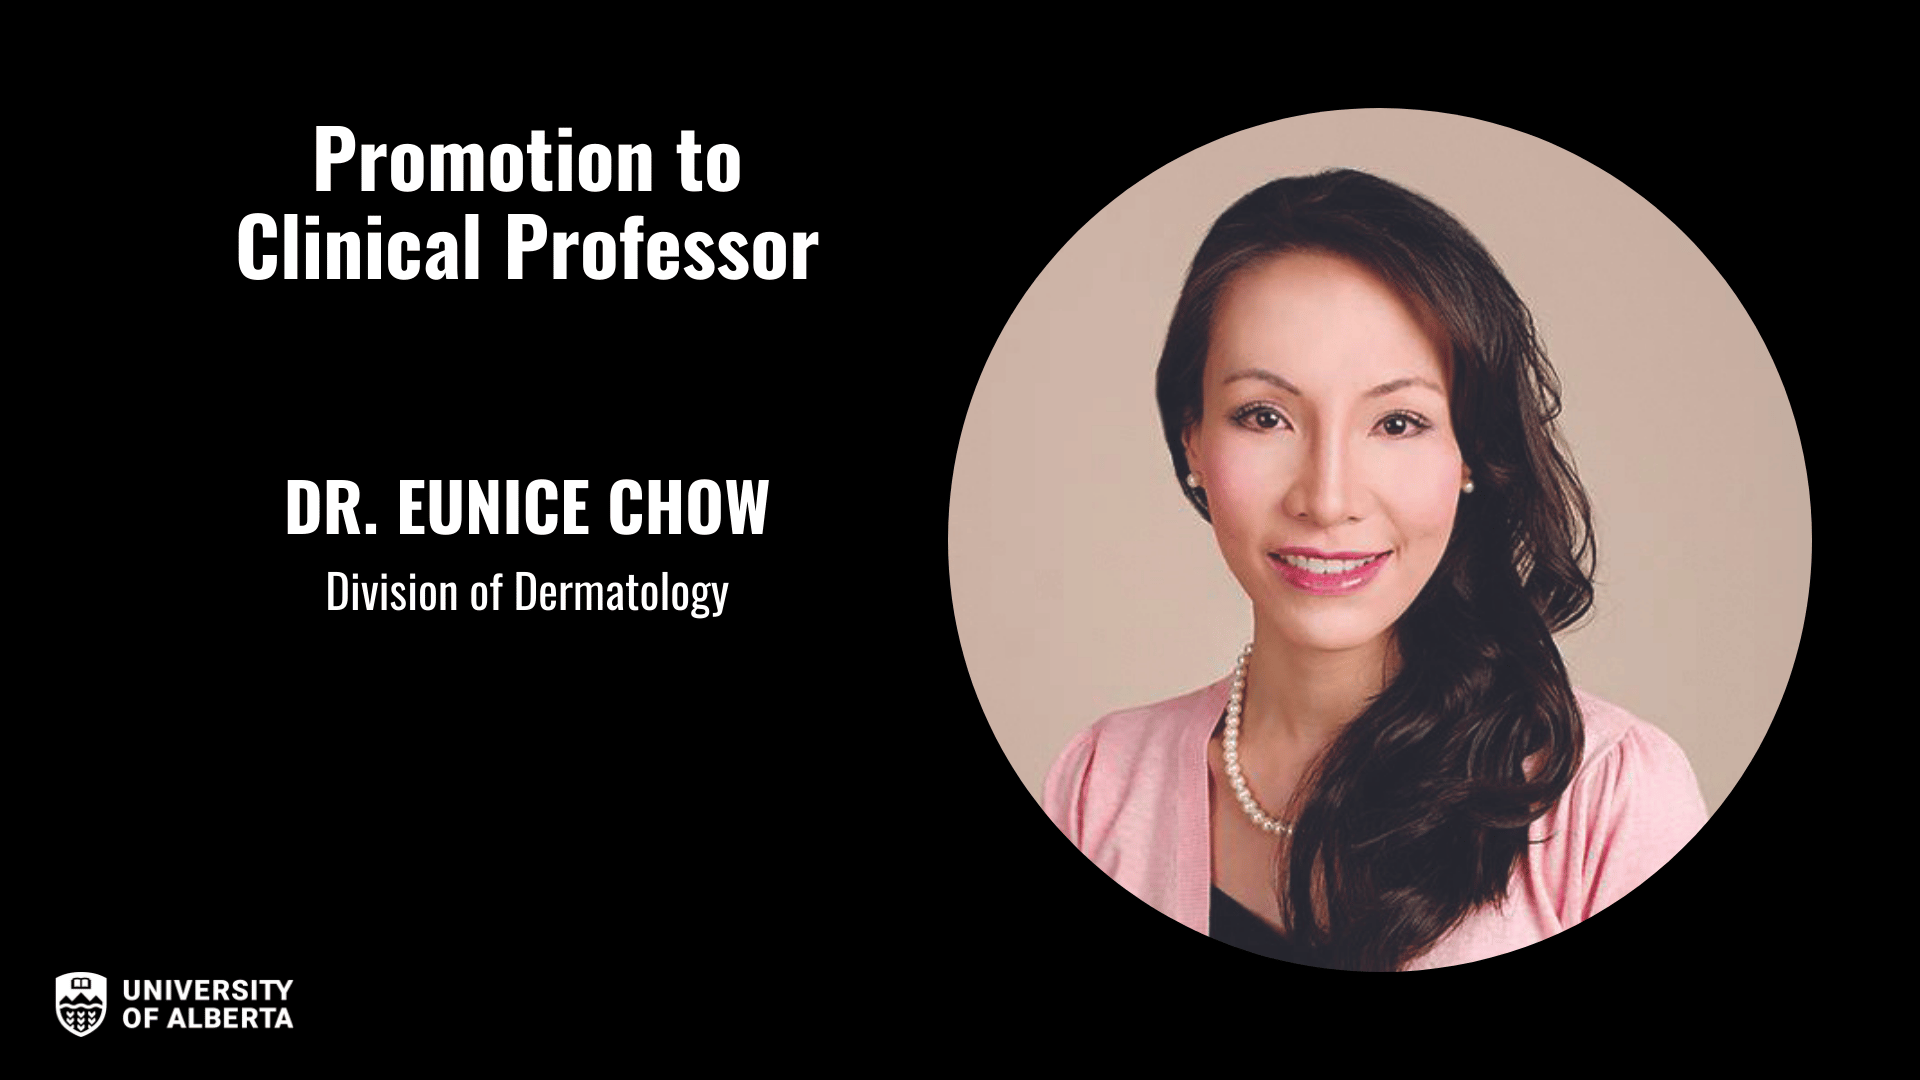 Dr. Eunice Chow